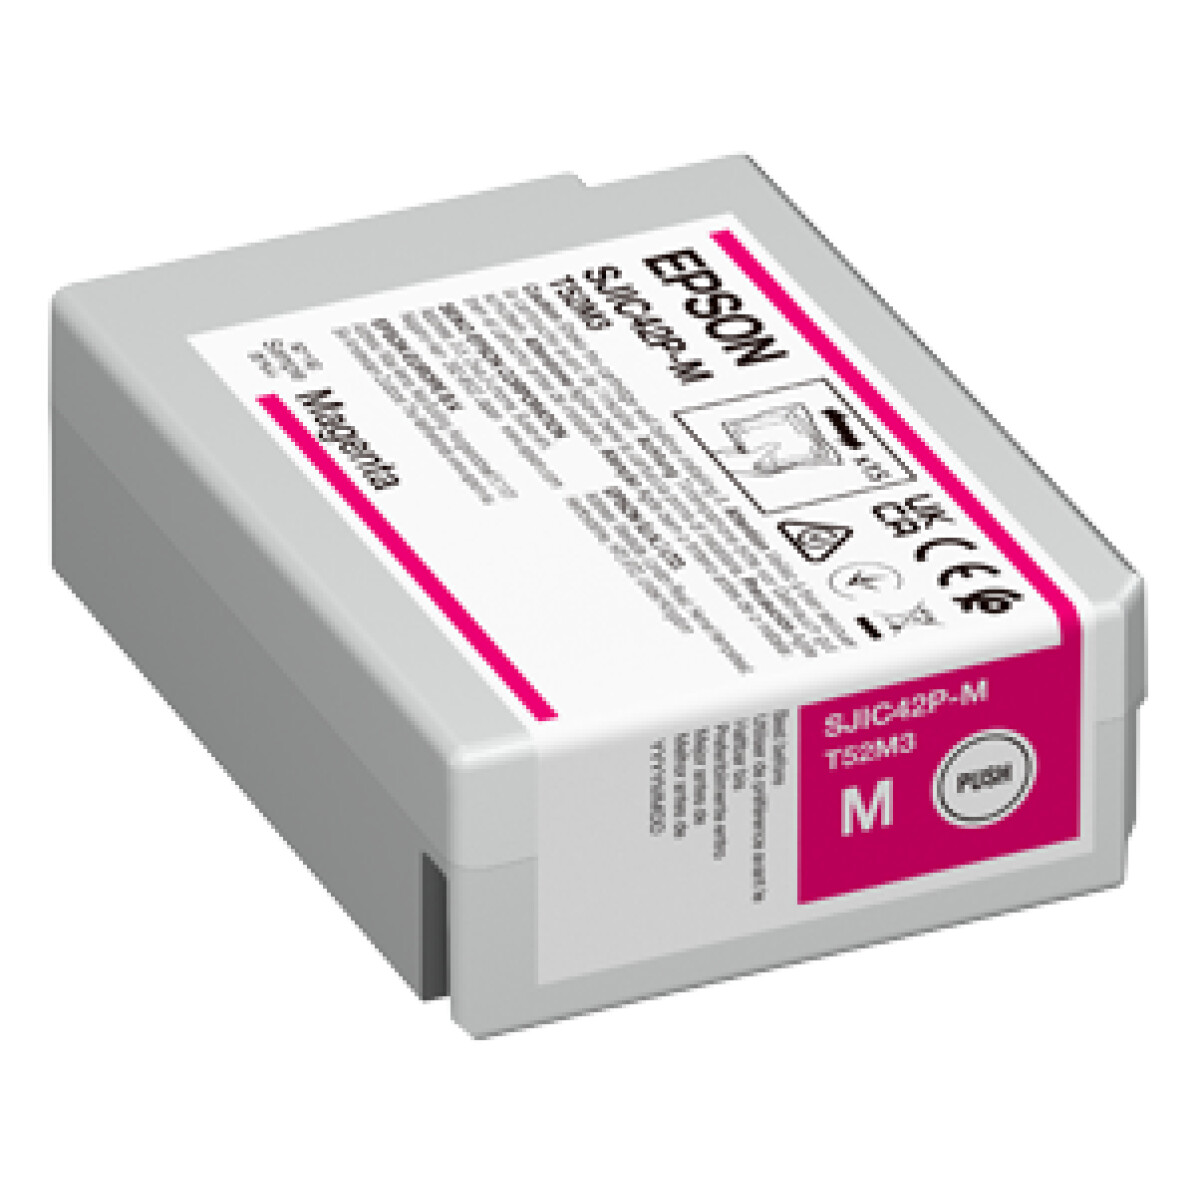 Epson - Printcartridge ColorWorks C4000 - SJIC42P-M (Magenta)